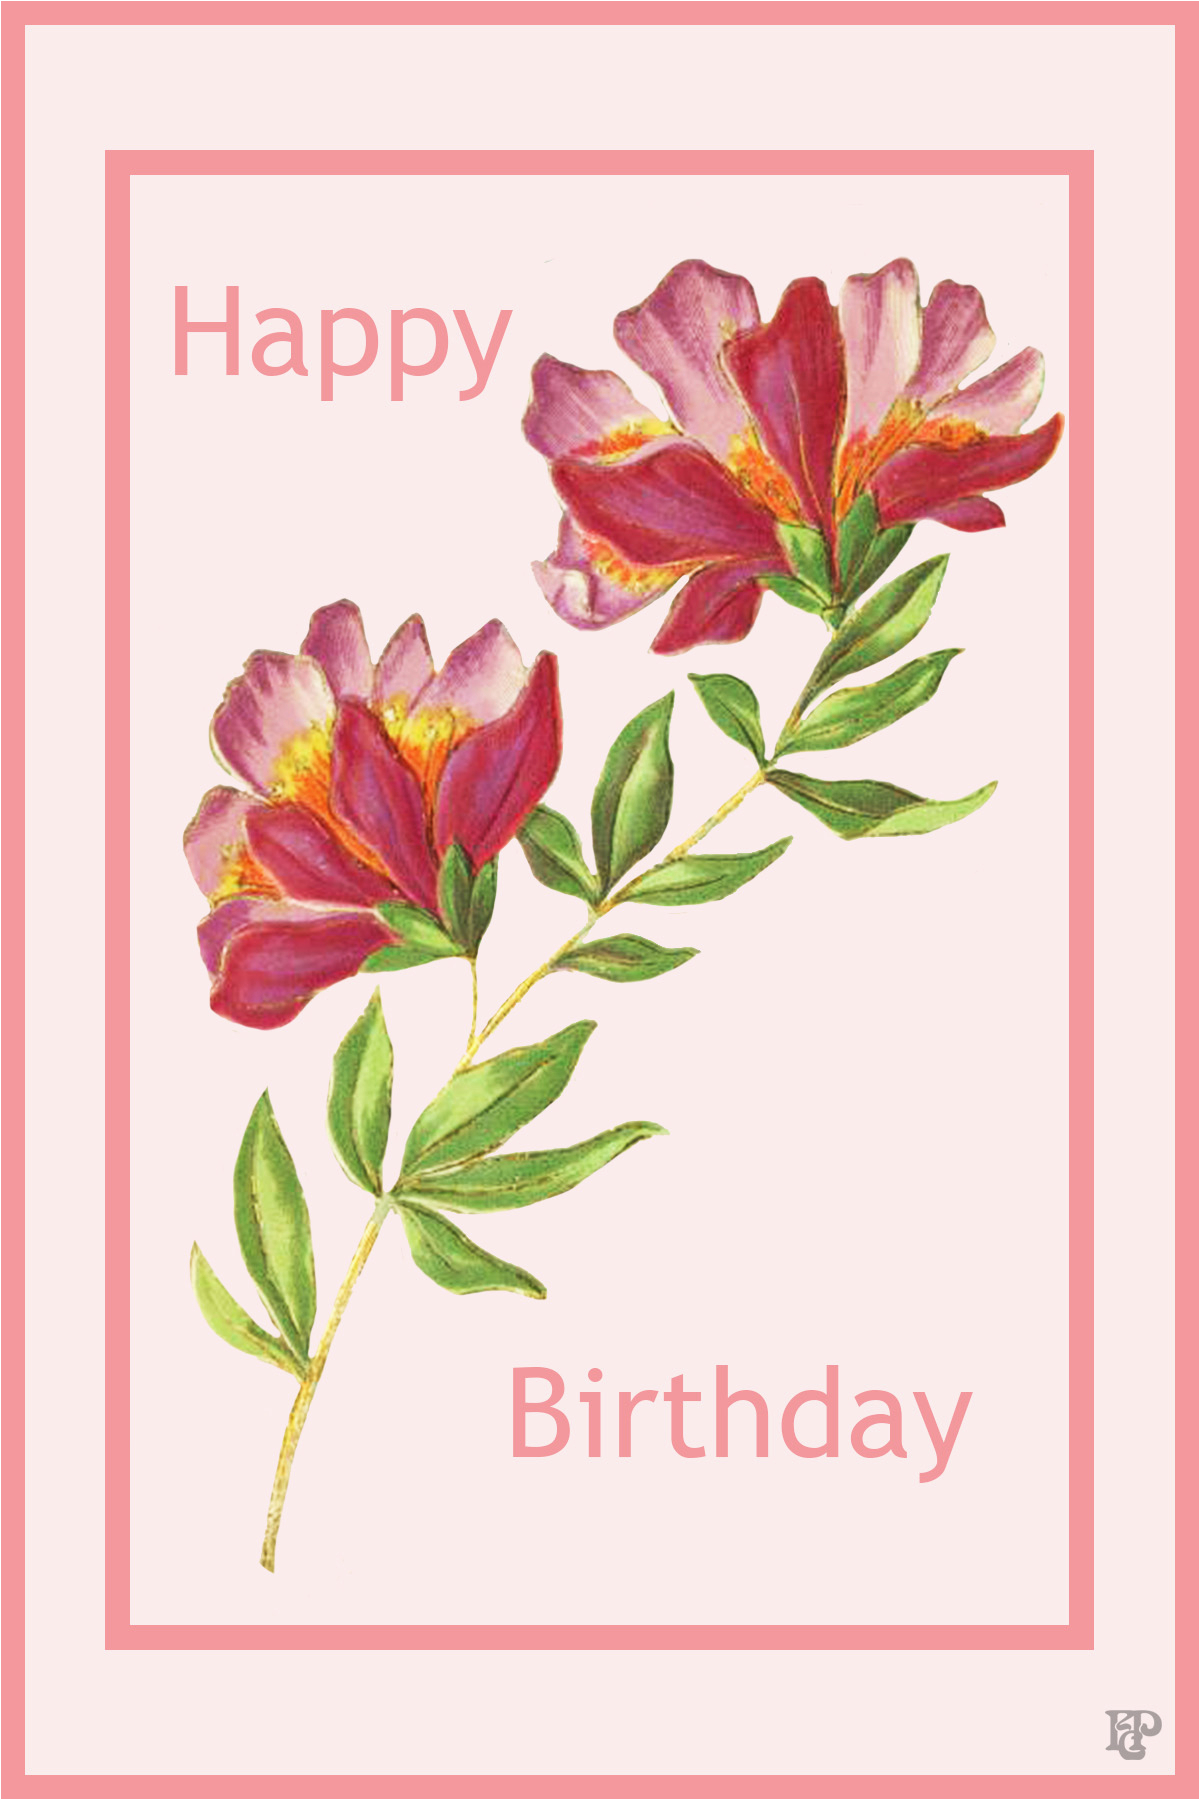 Flower Cards for Birthdays Flower Greeting Cards for Birthdays